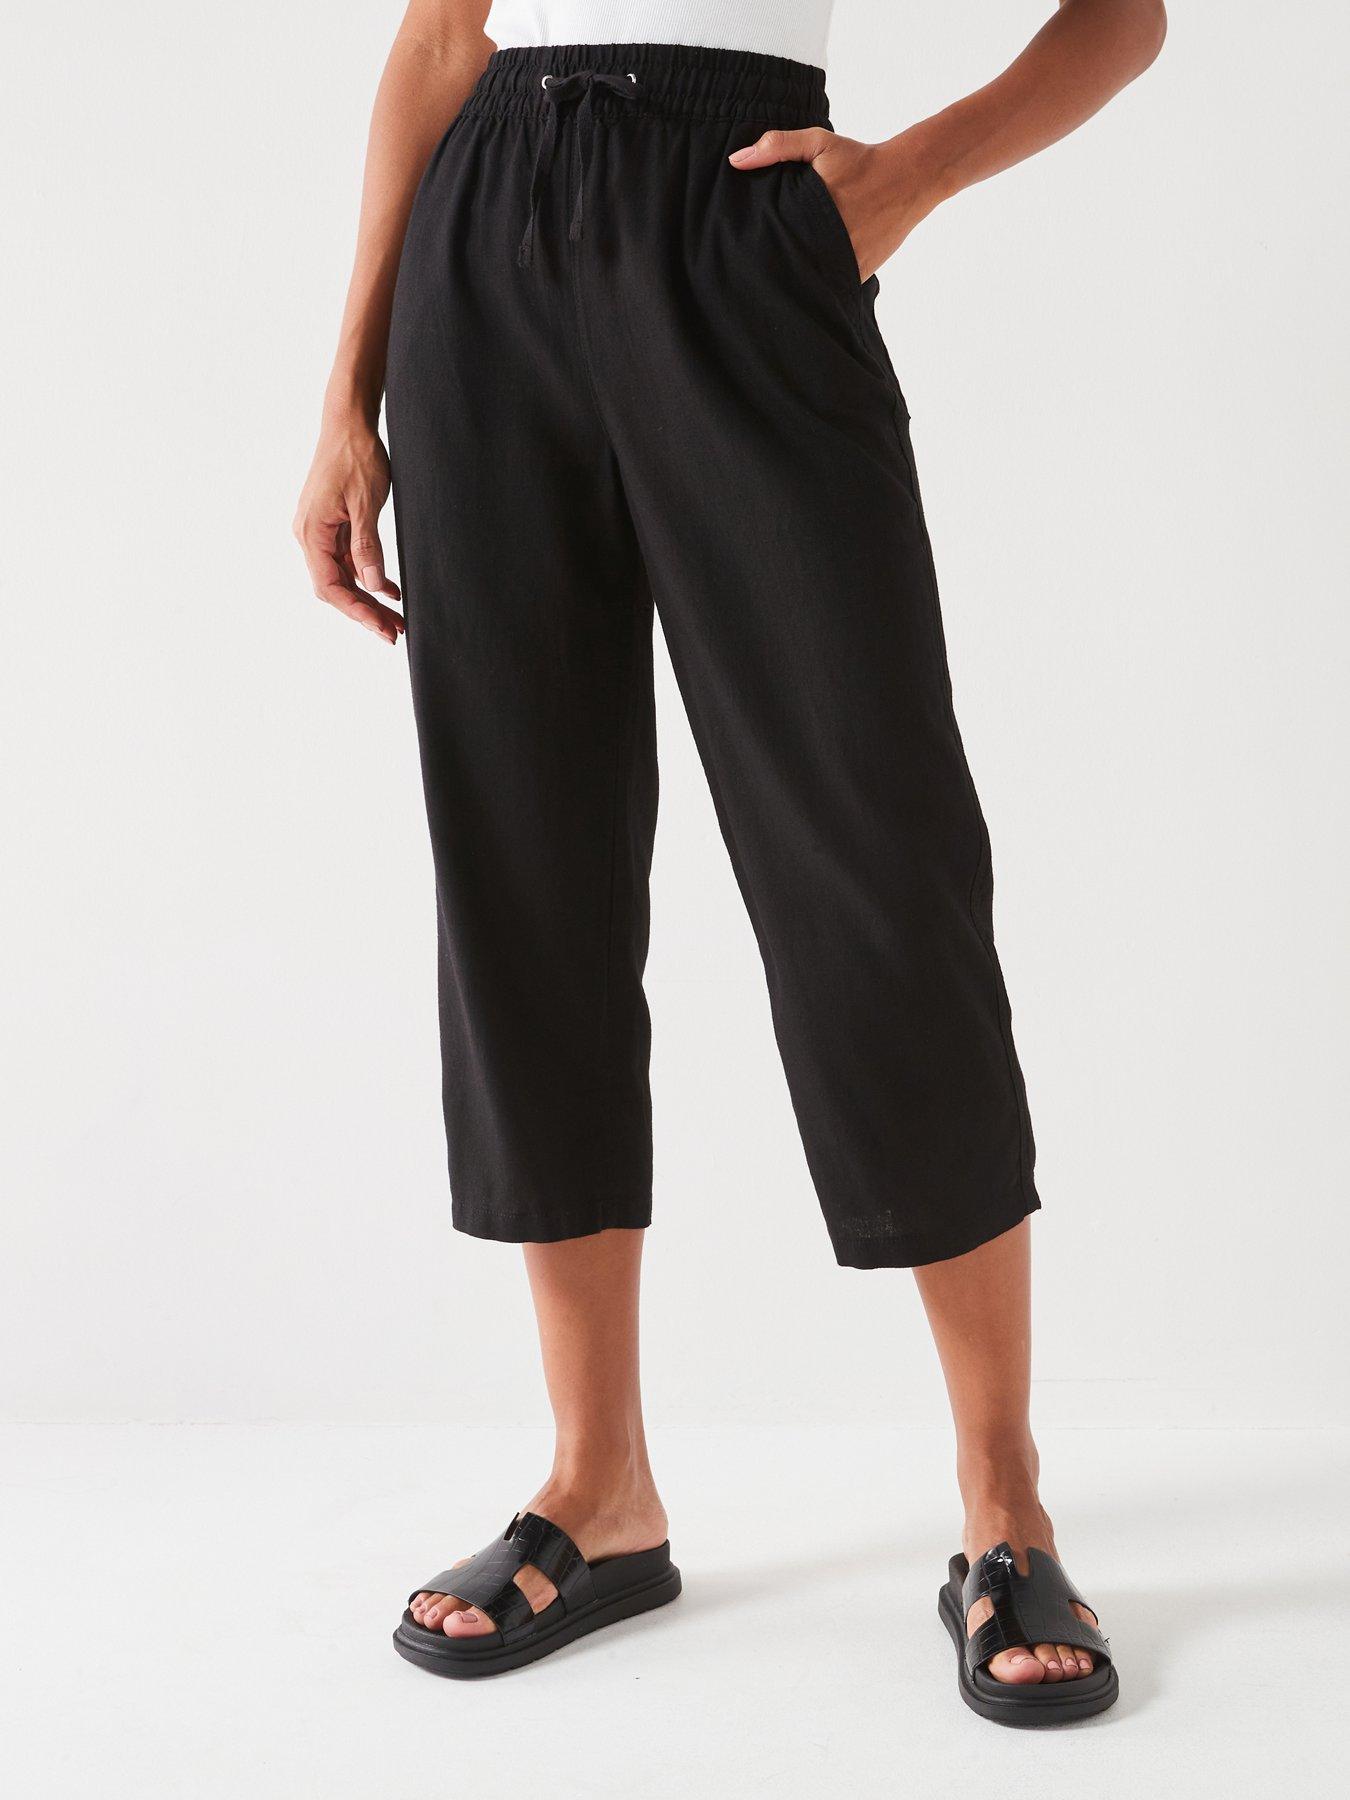 Ladies Cropped Capri Trousers Large Size 16 100% Cotton Summer